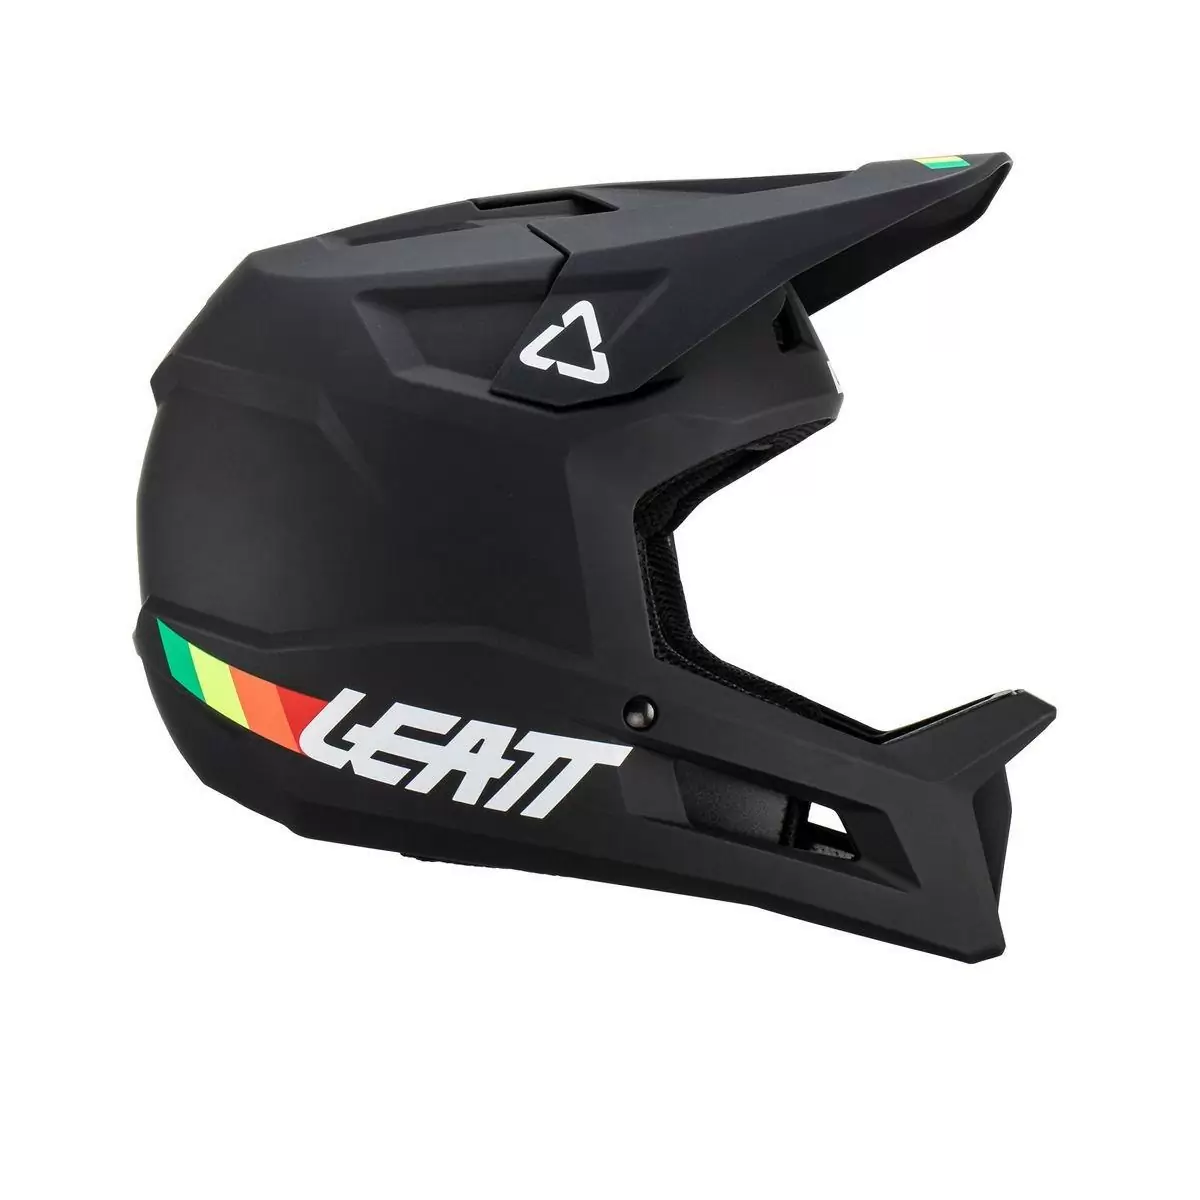 Gravity 1.0 Kids MTB Fullface Helmet Stealth Black Size XS (53-54cm) #2